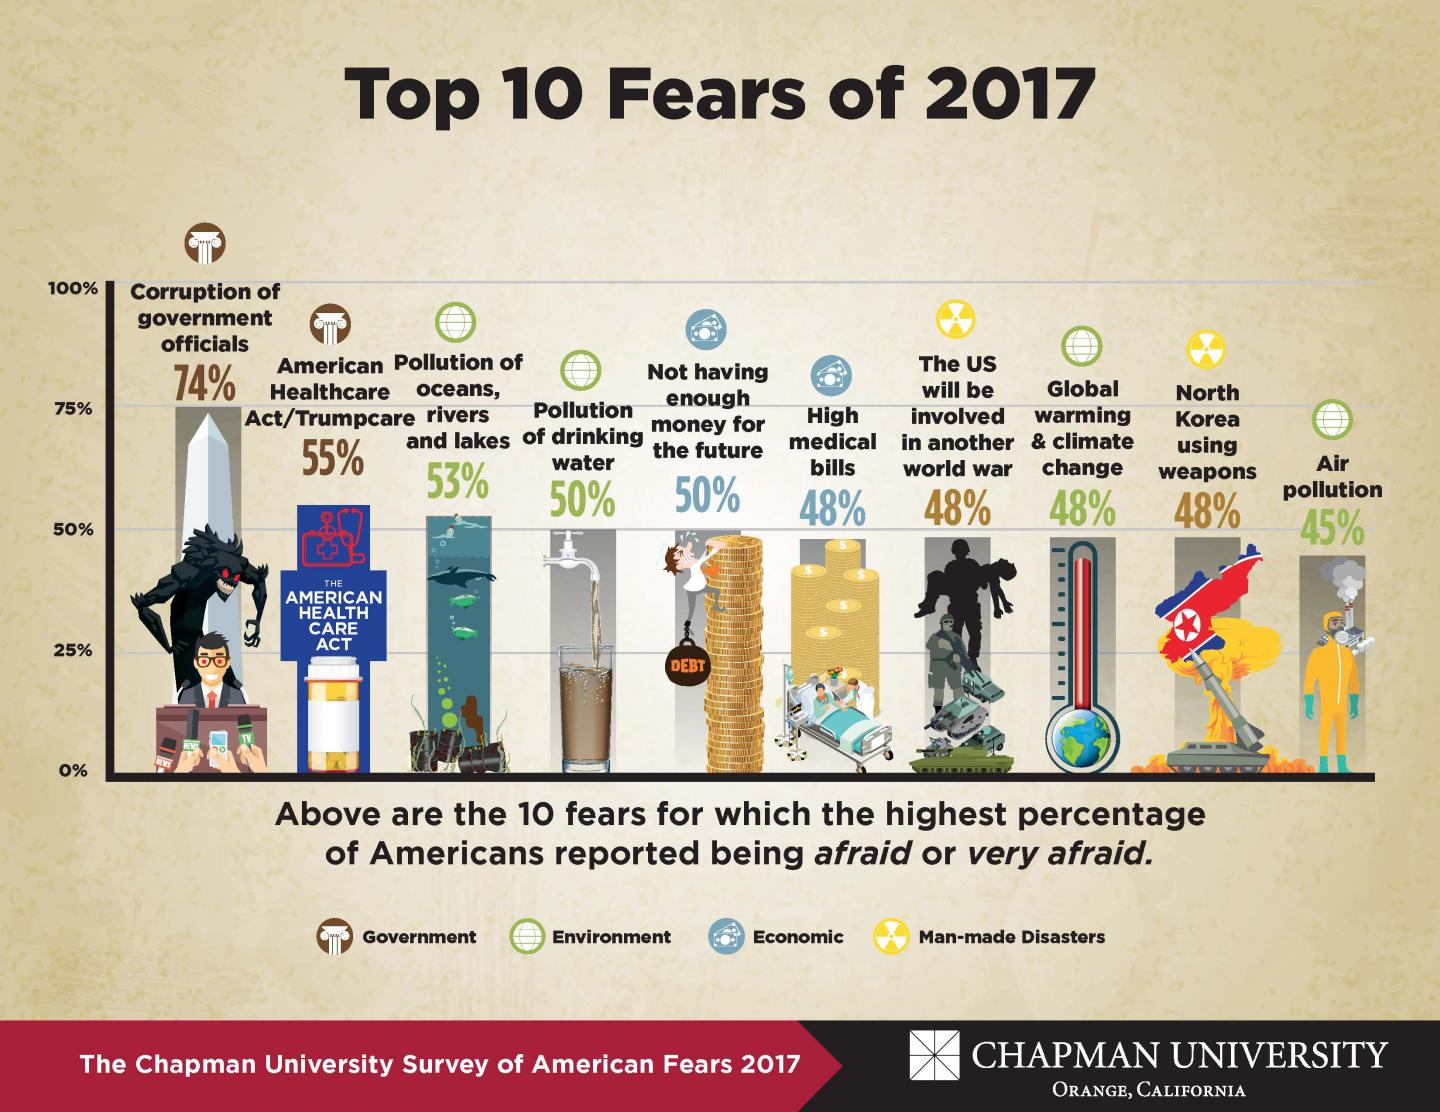 Top 10 Fears of Americans in 2017